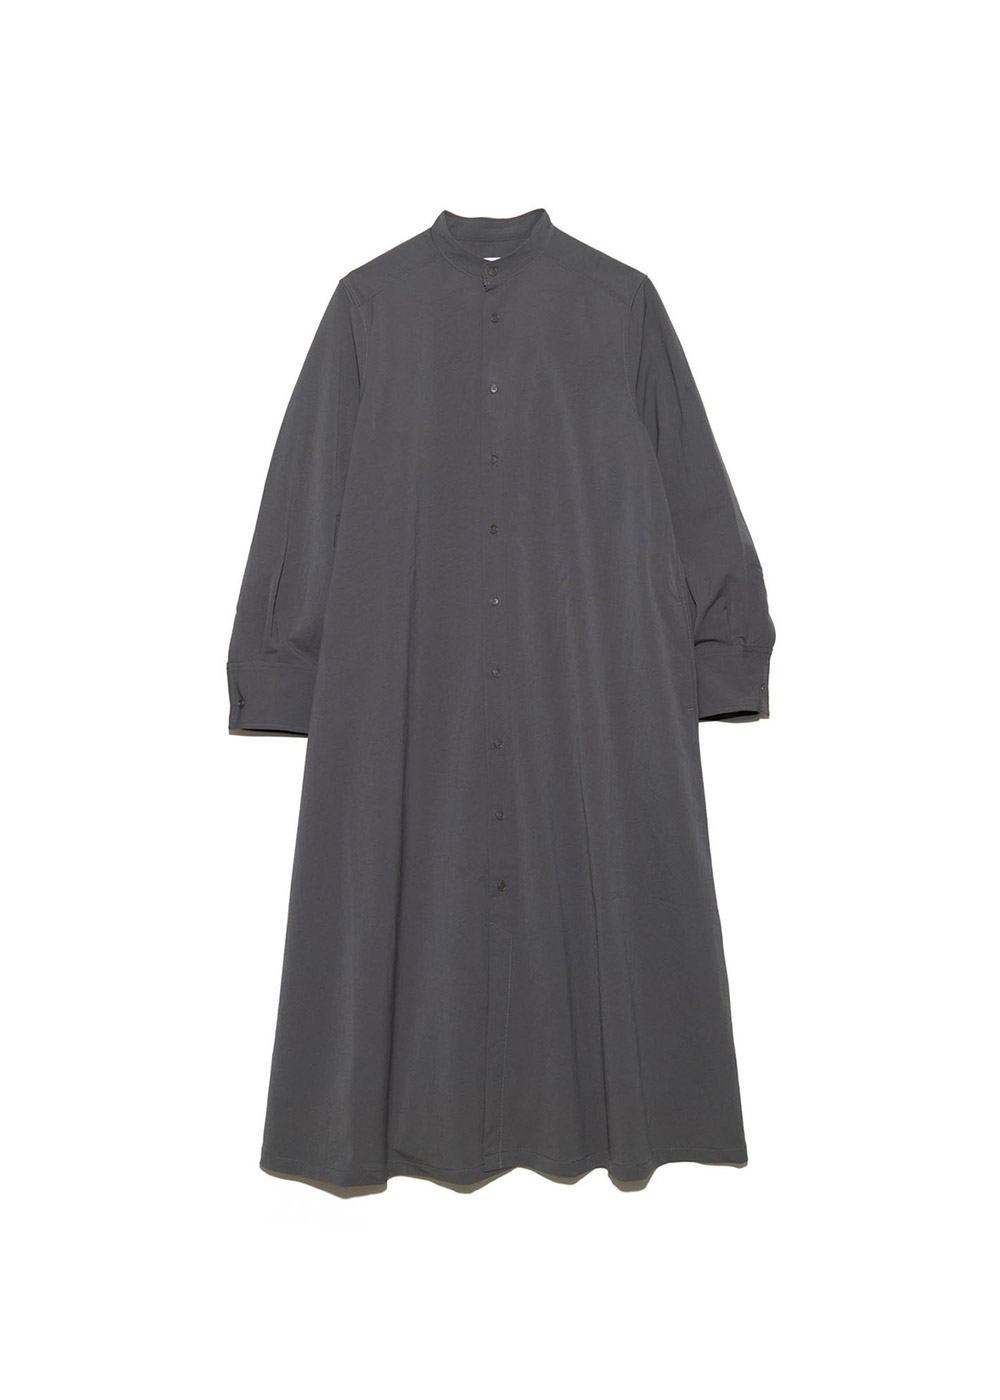 ALPHADRY Shirt Dress (Gray)